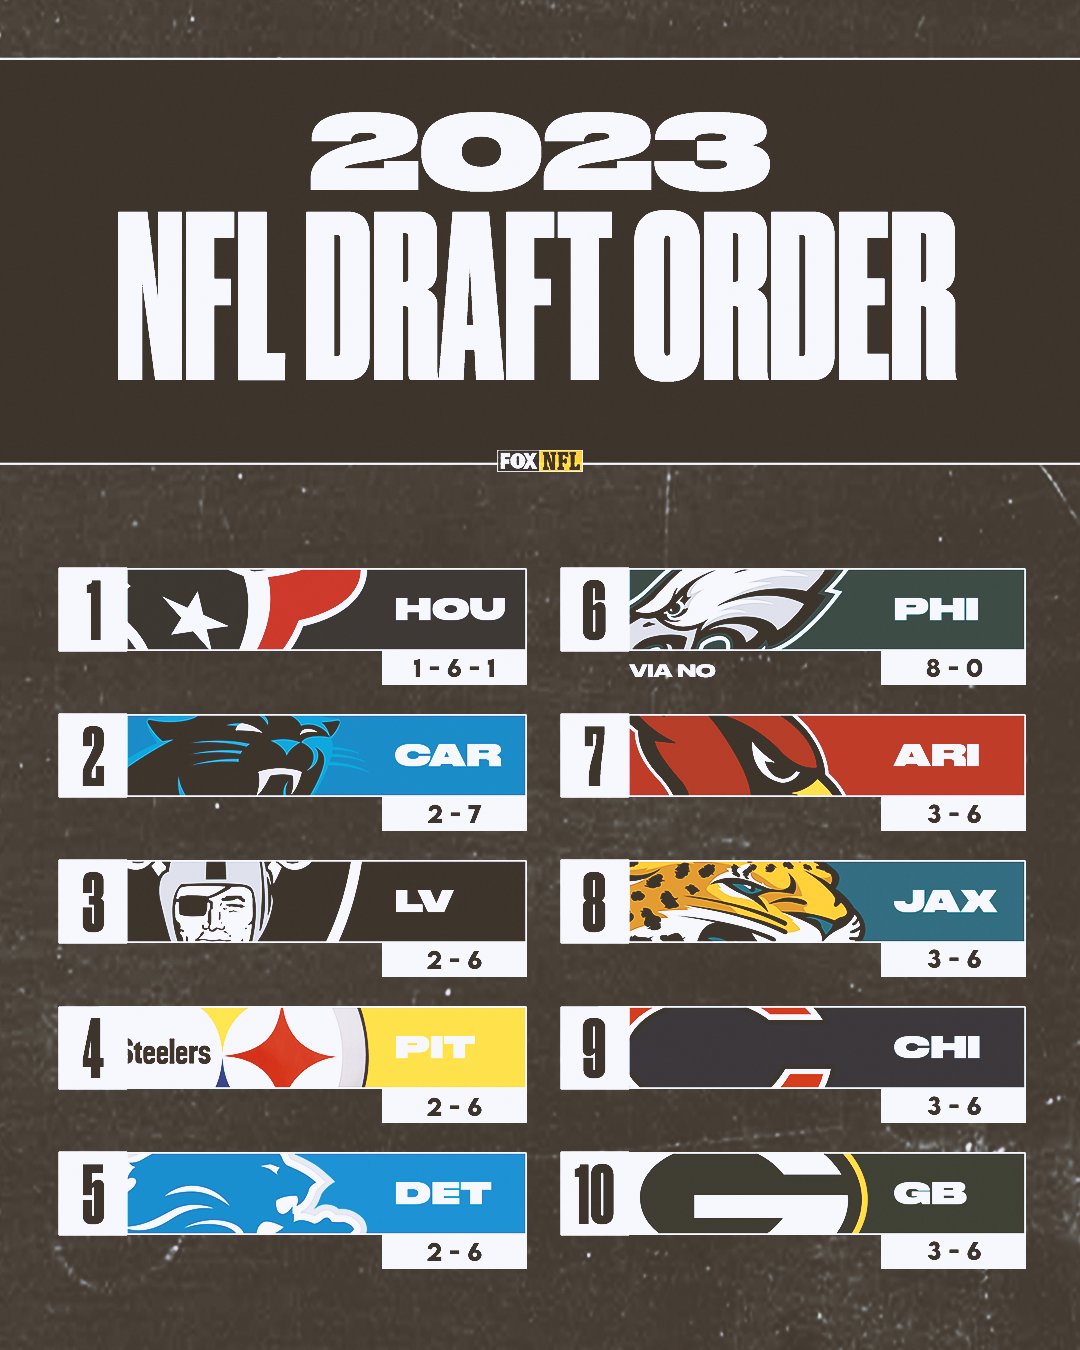 top 10 nfl draft picks